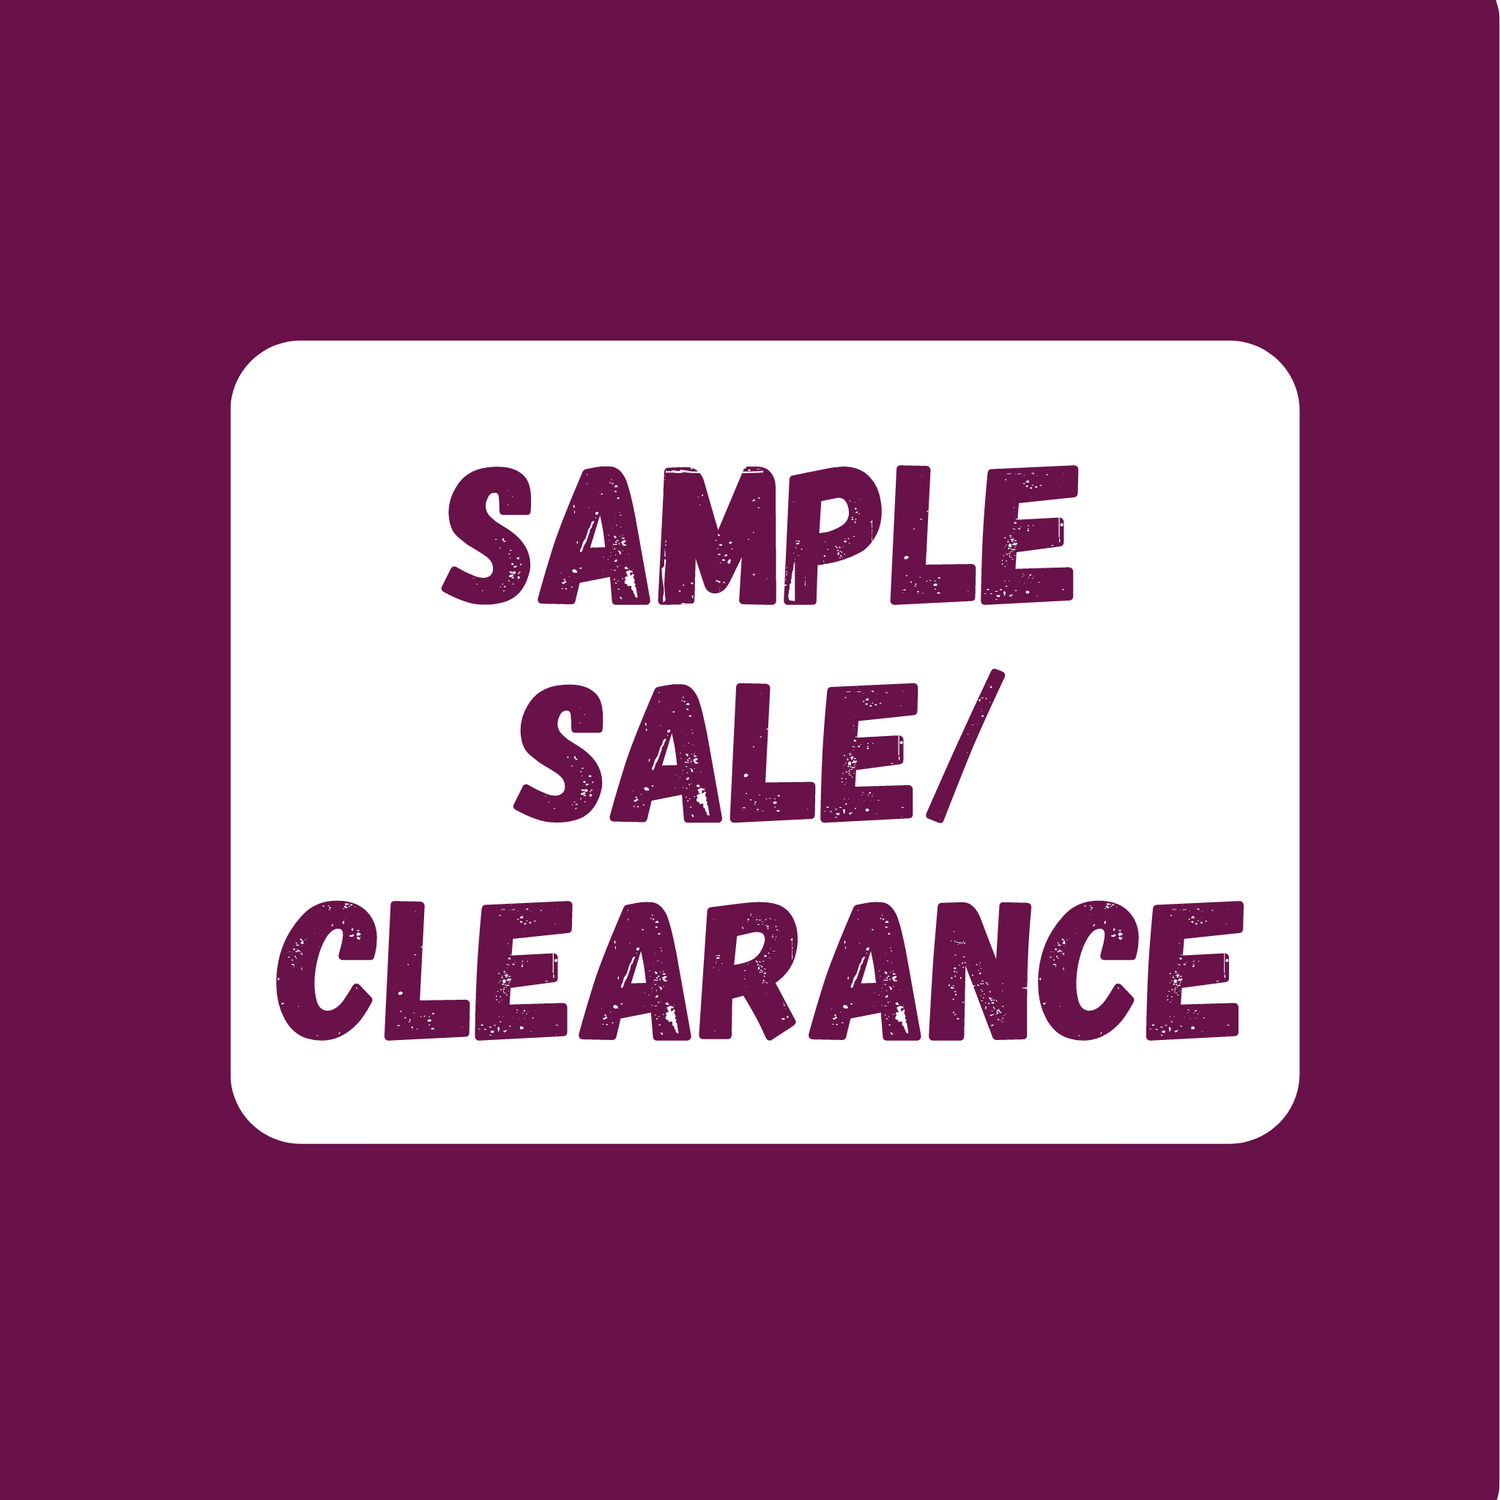 Sample Sale/Clearance